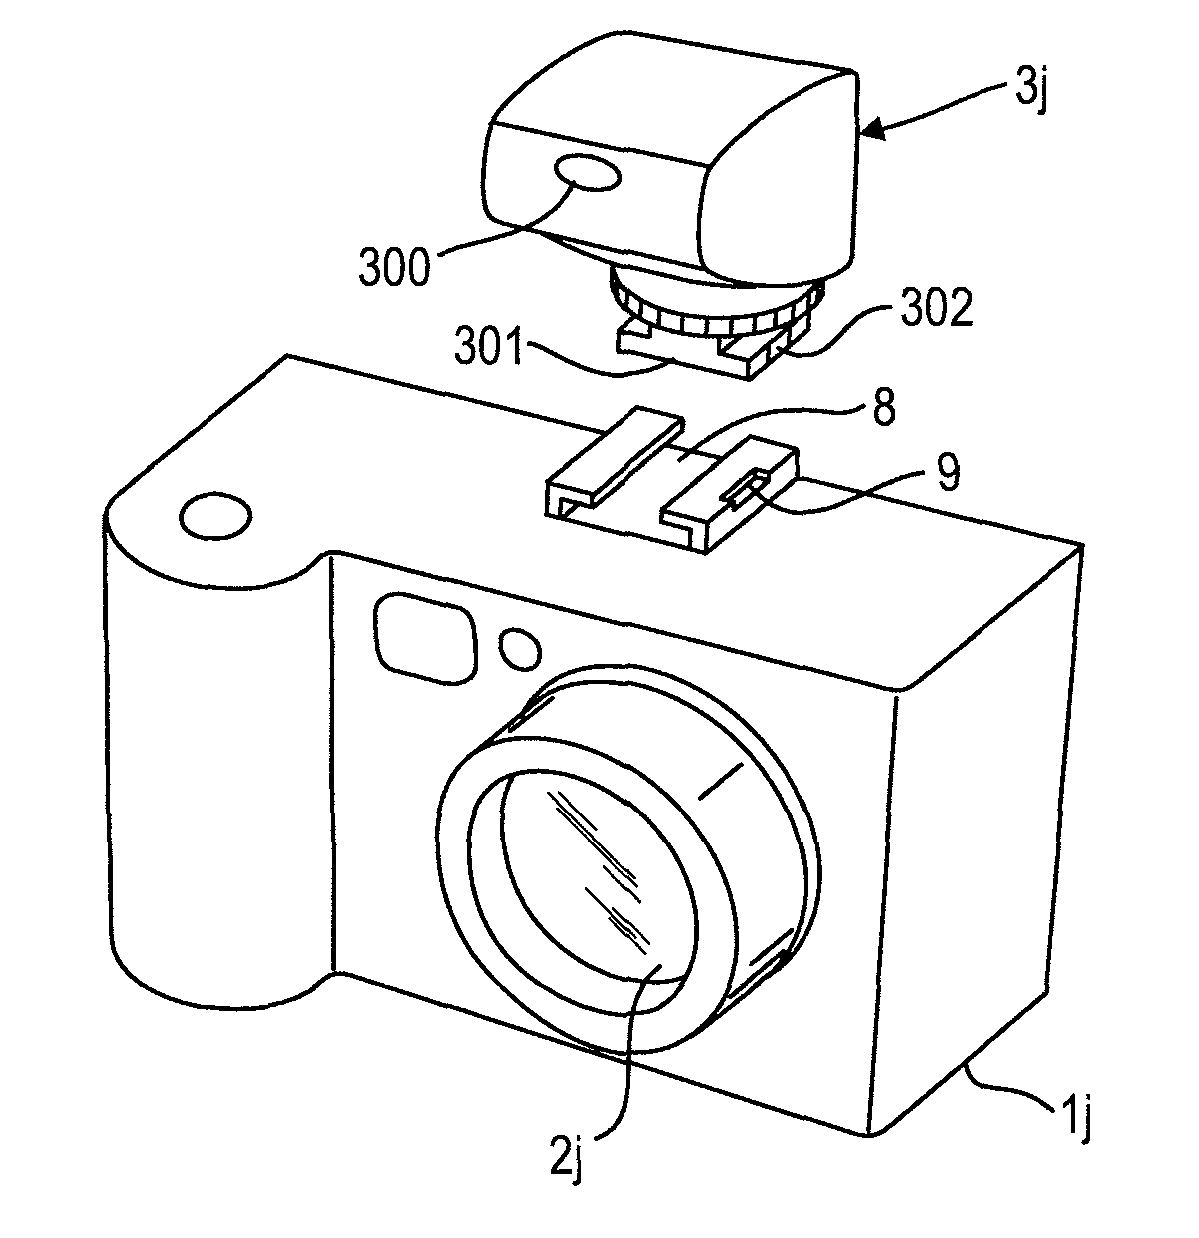 Camera with radar system